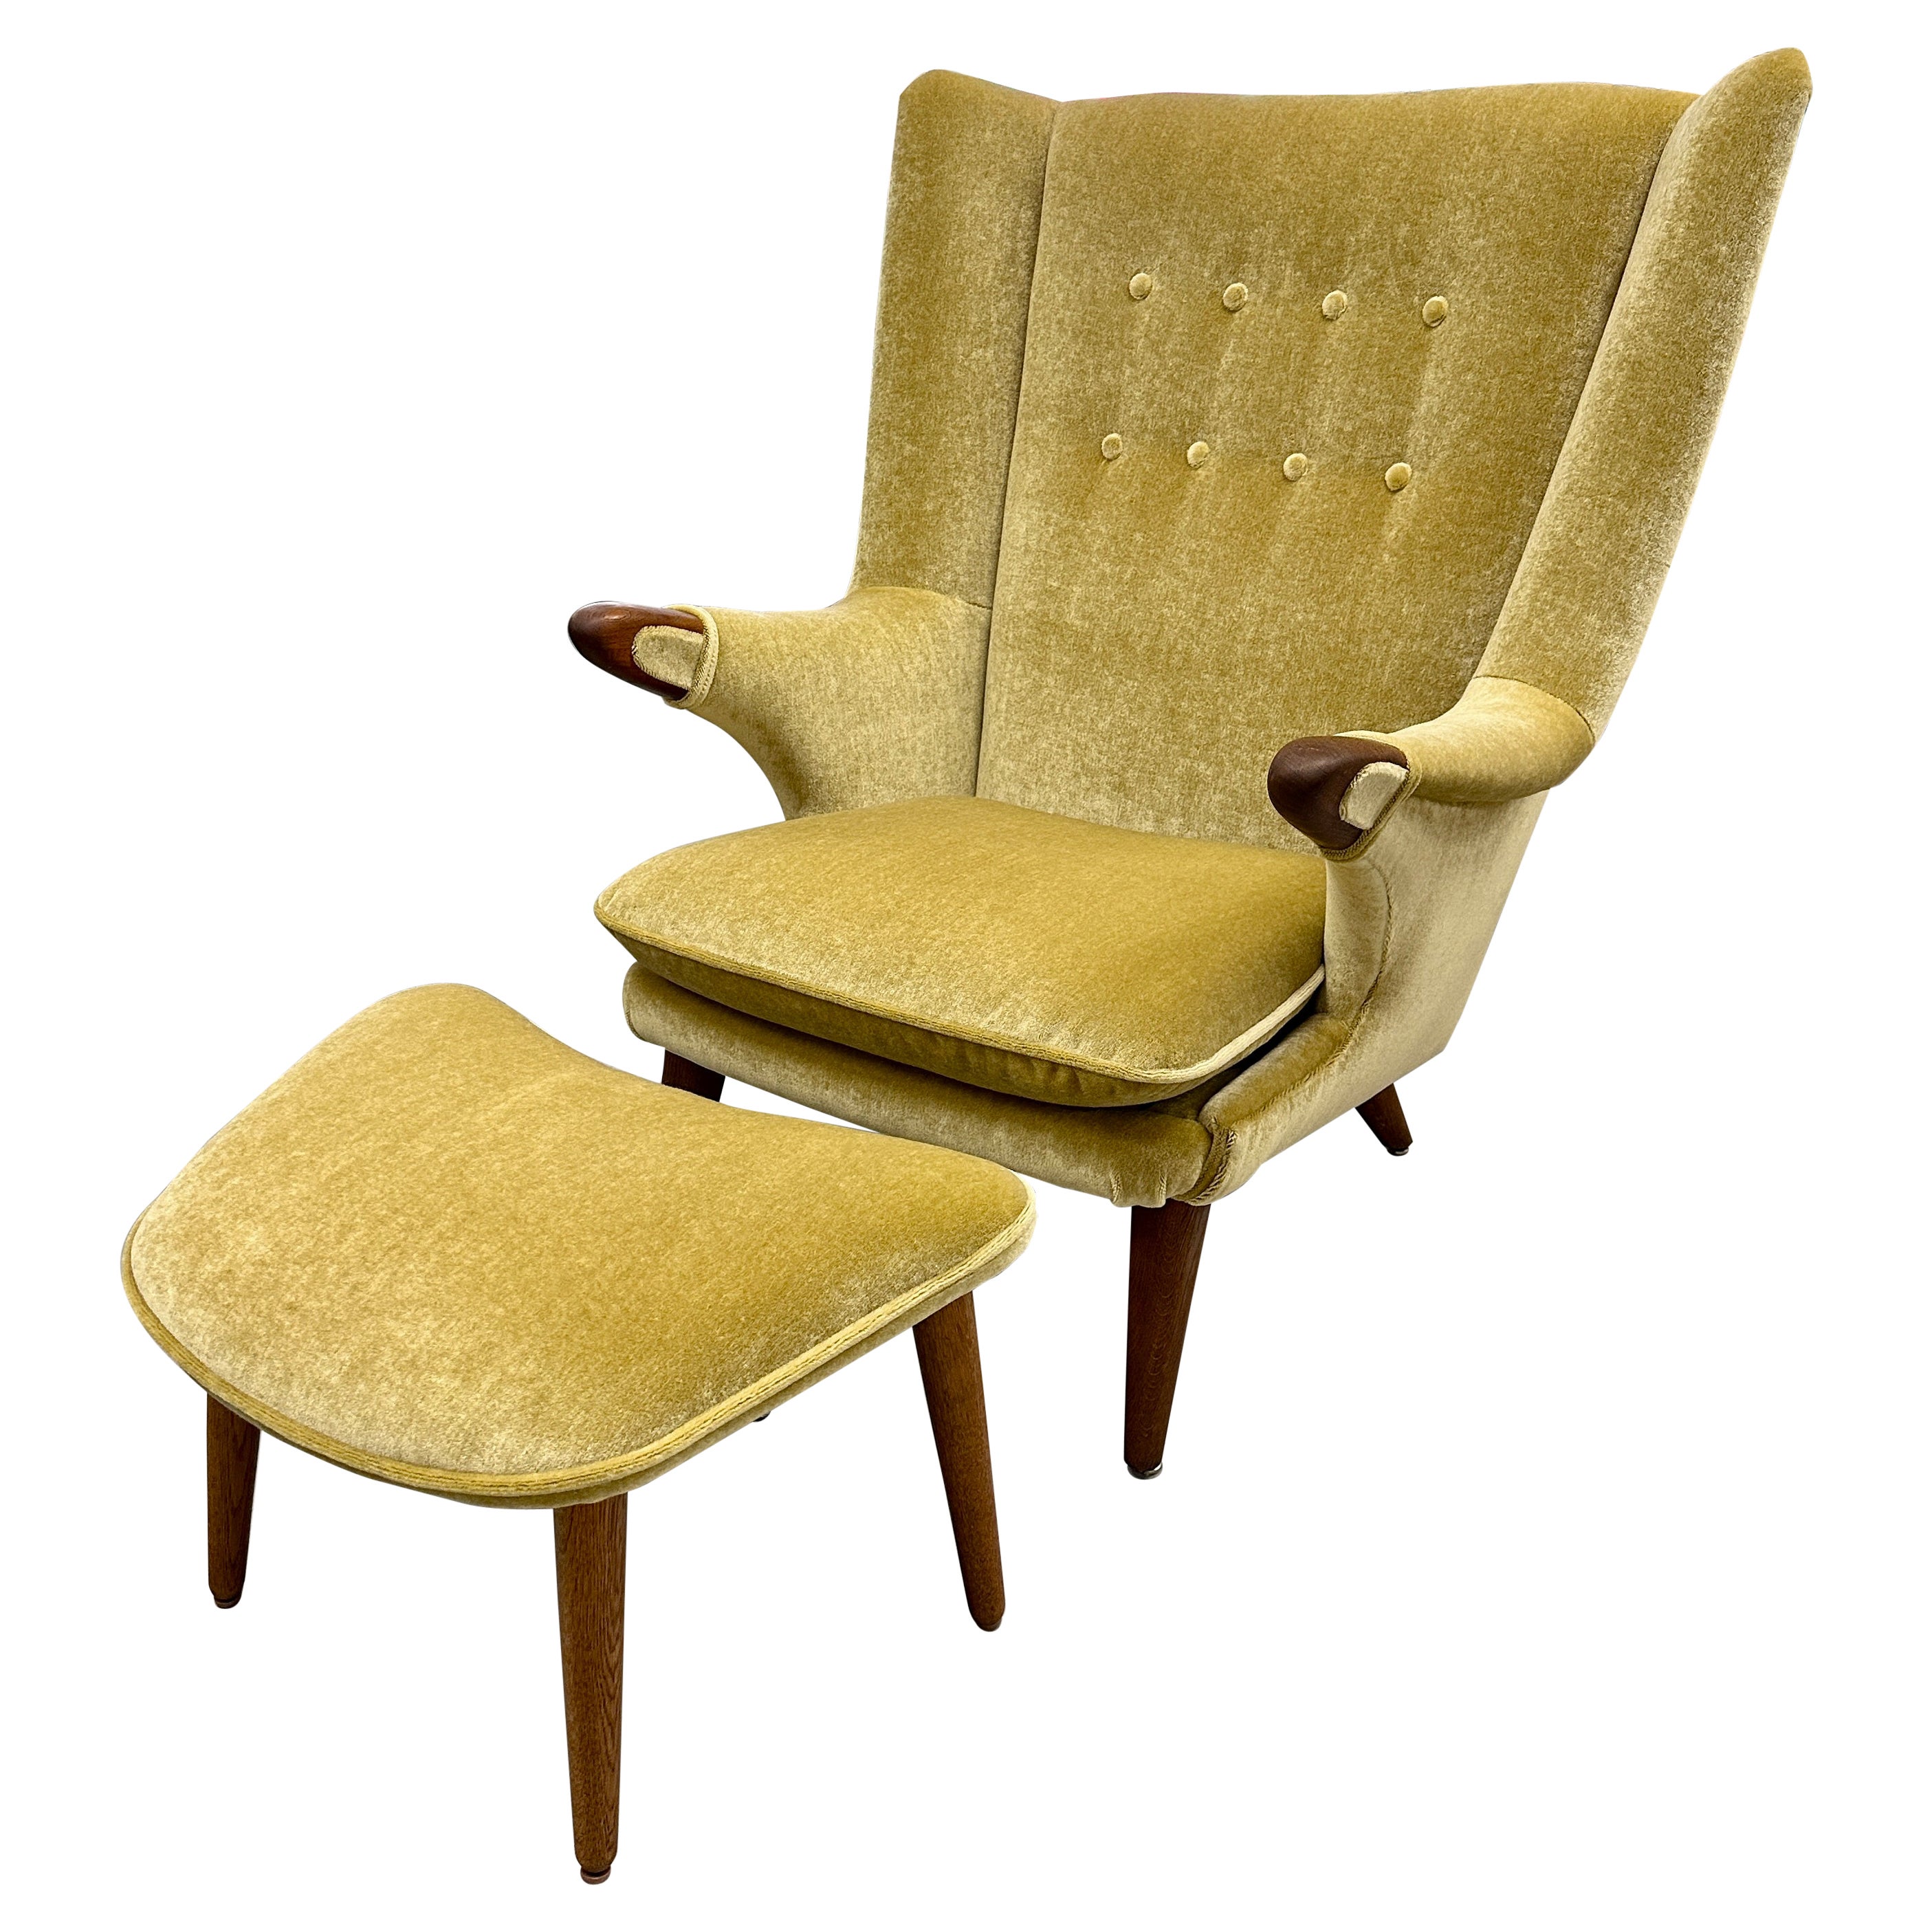 Bent Moller Jepsen for Simo "Bear" Lounge Chair and Ottoman